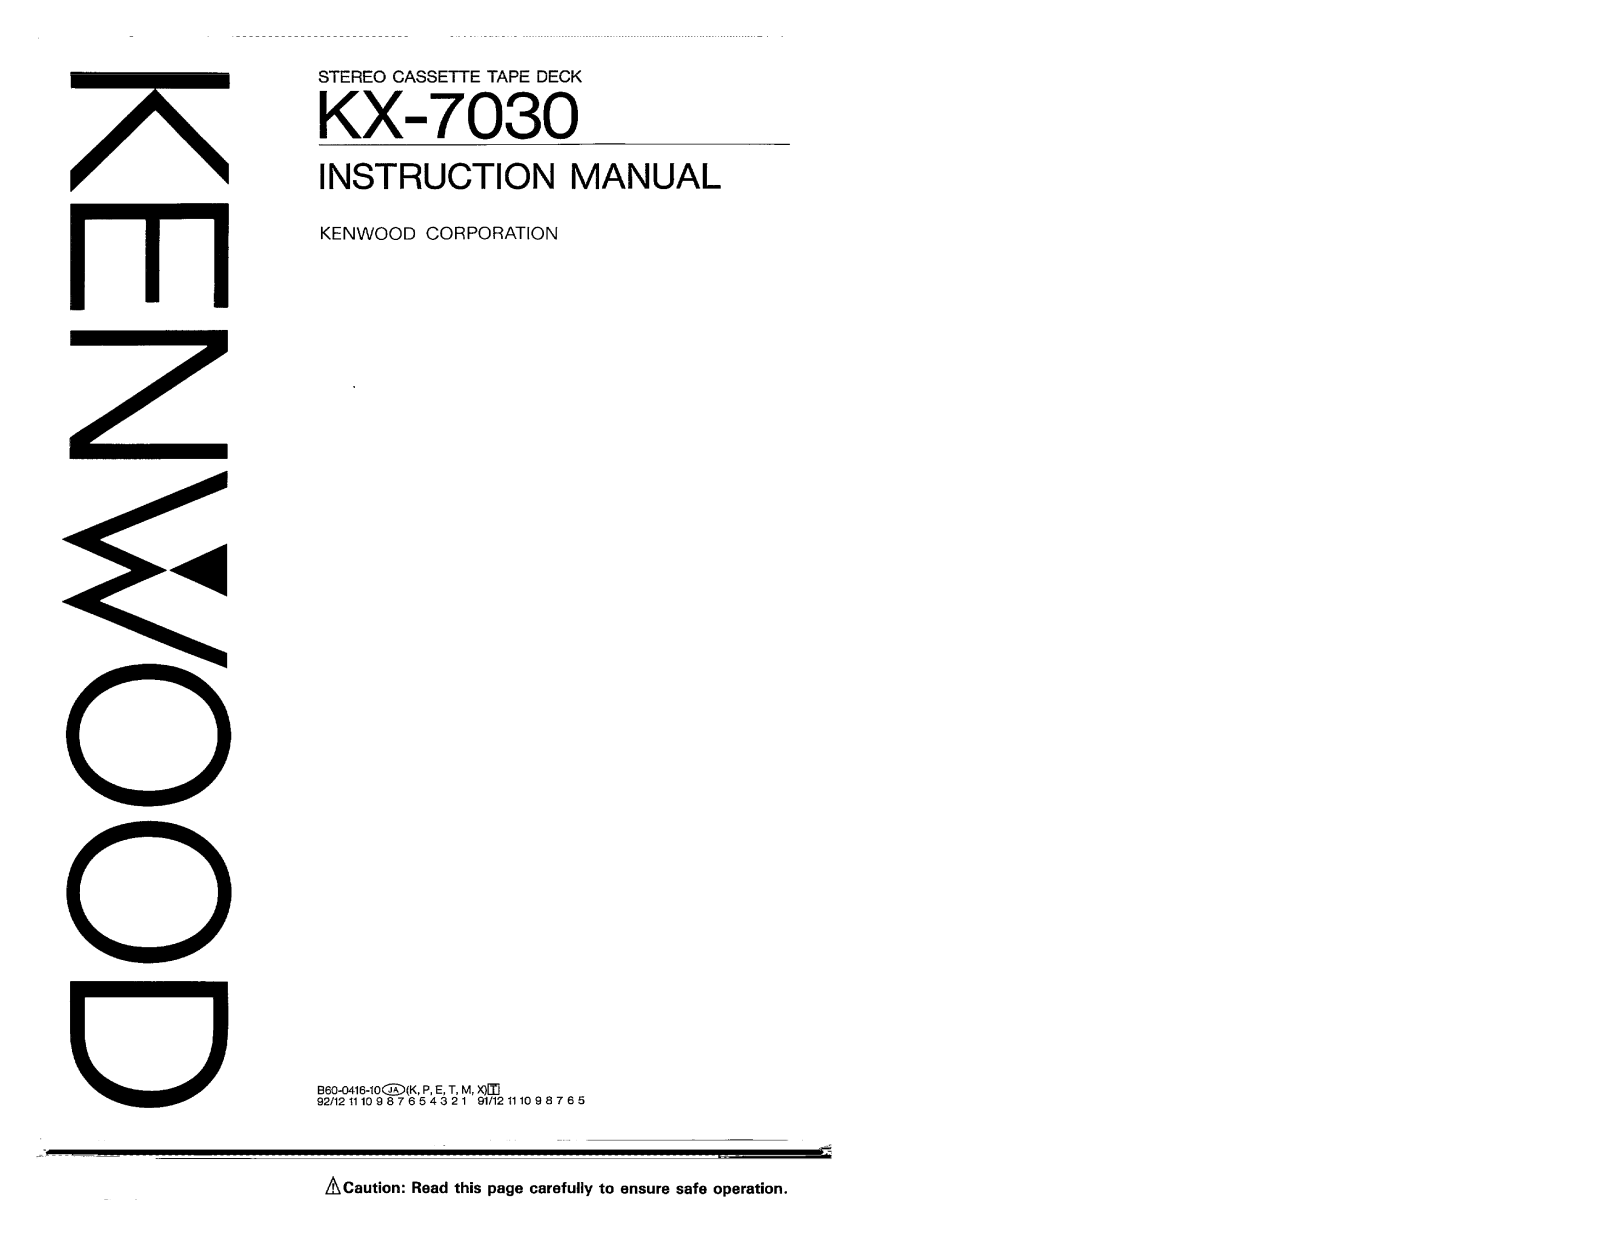 Kenwood KX-7030 Owner's Manual